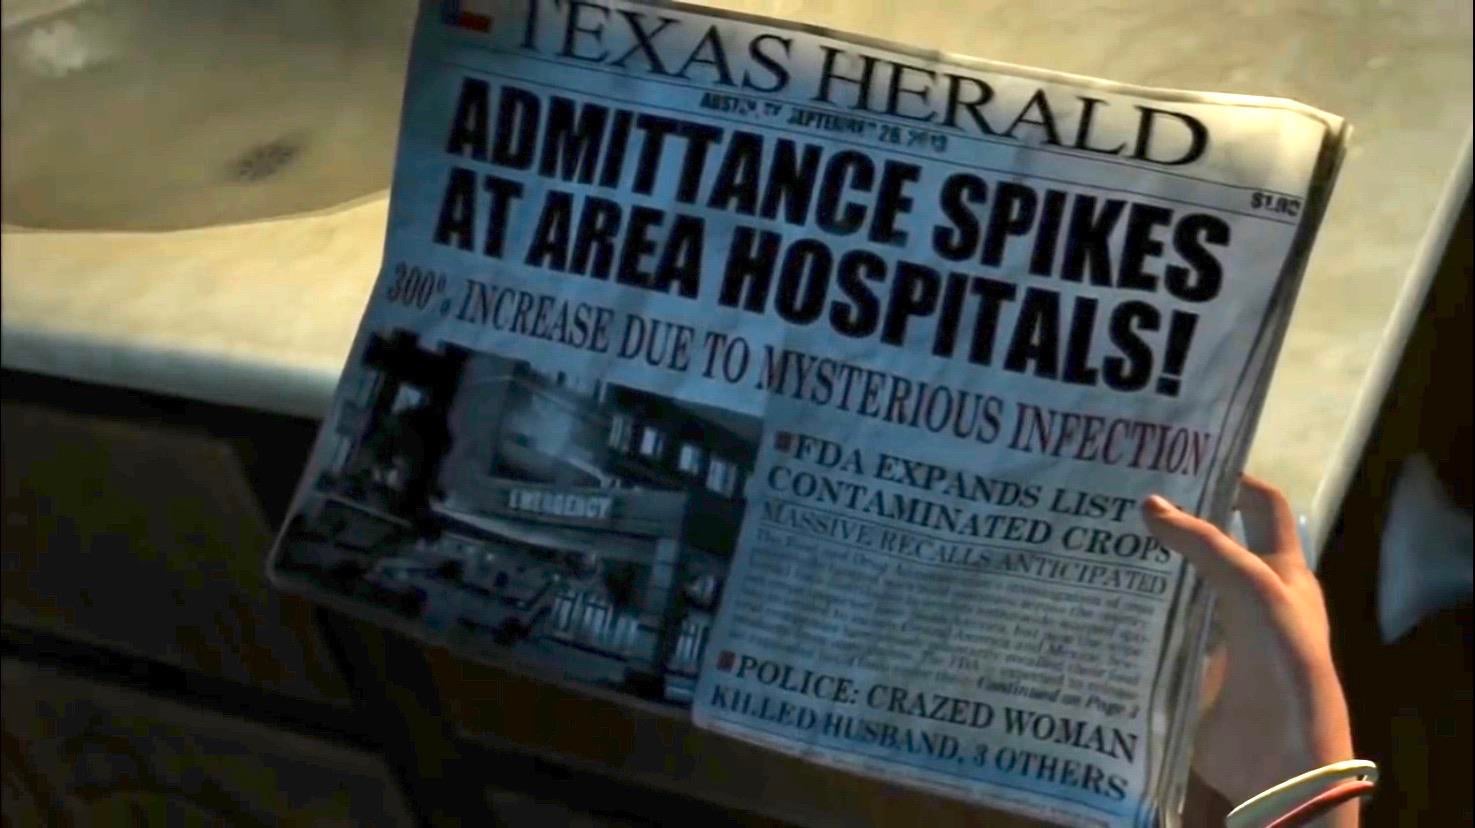 Jornal "Texas Herald" mostrado em 'The Last of Us'